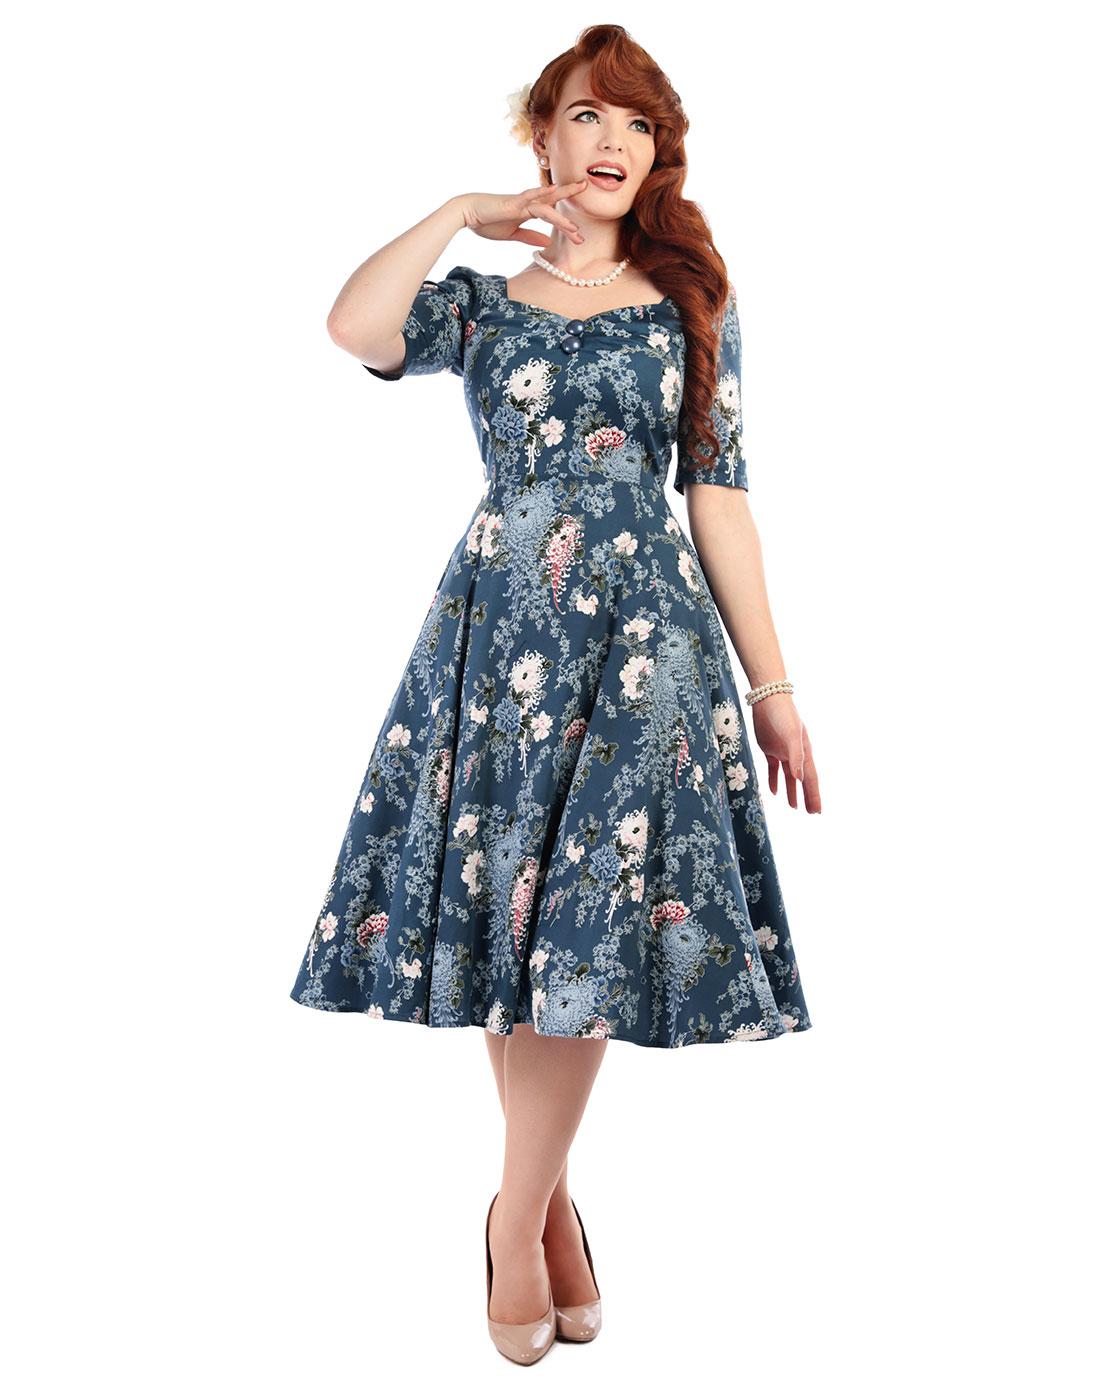 Dolores Garden COLLECTIF Floral Retro 50s Dress